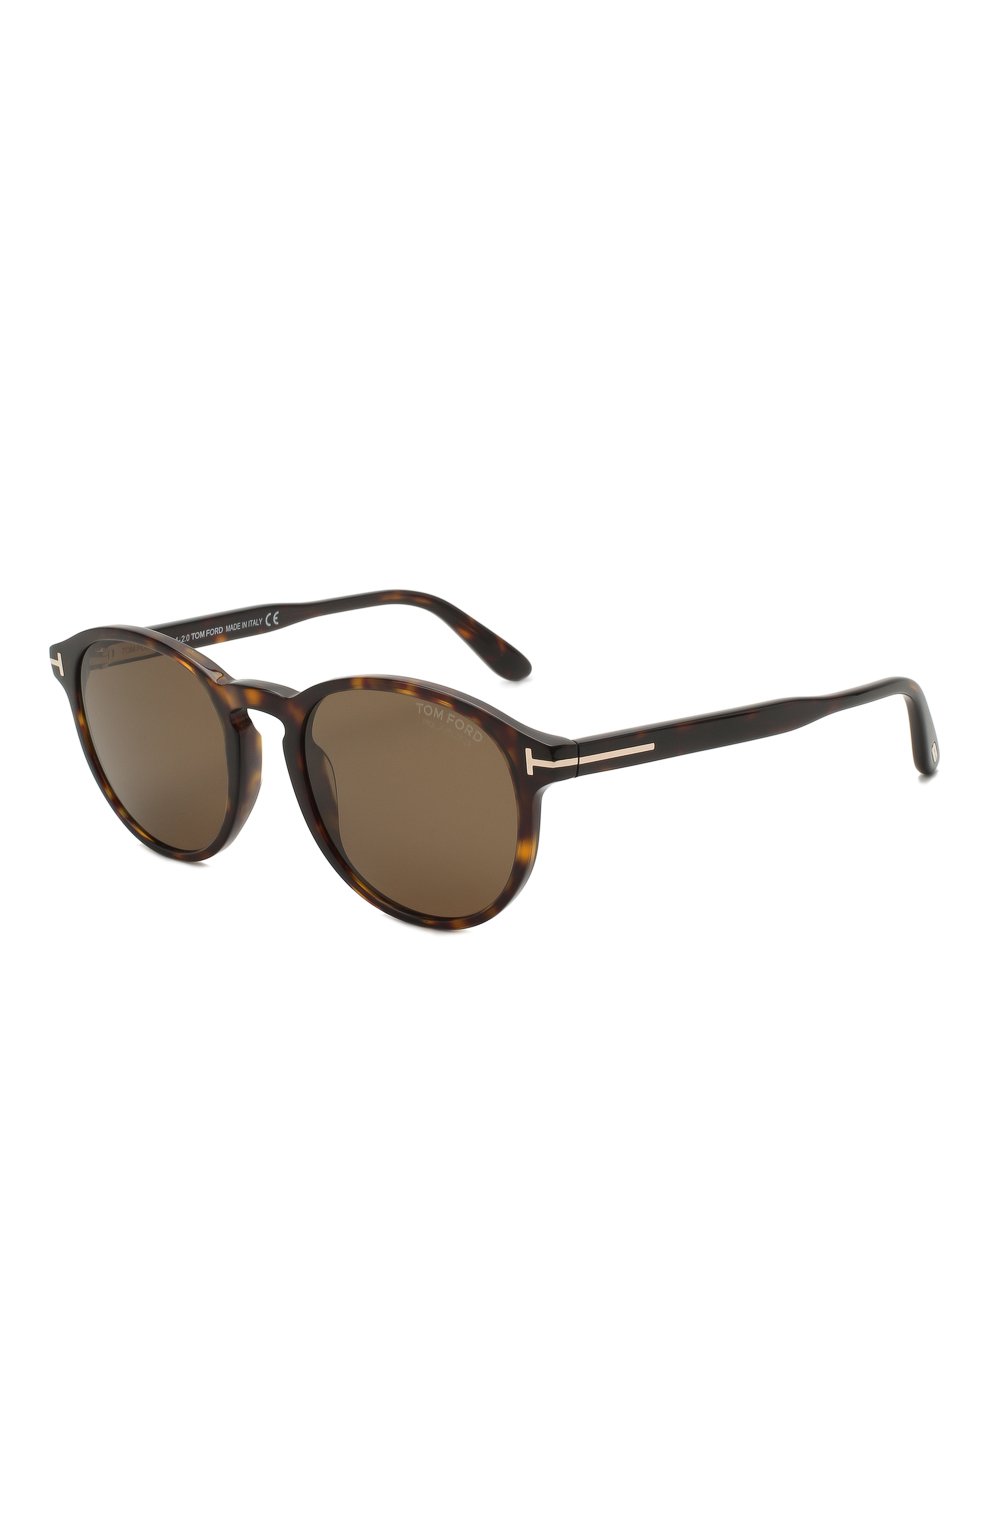 Мужские солнцезащитные очки TOM FORD коричневого цвета, арт. TF834 52M | Фото 1 (Тип очков: С/з; Очки форма: Круглые; Оптика Гендер: оптика-унисекс)